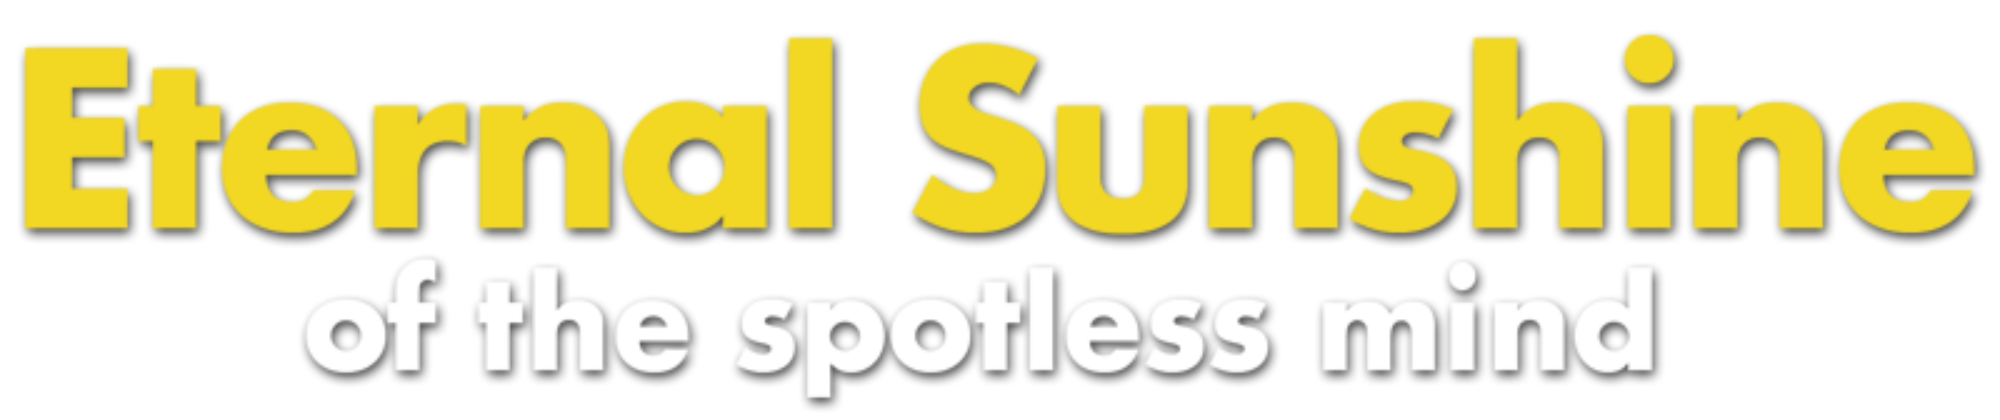 Spotless PNG-PlusPNG.com-654